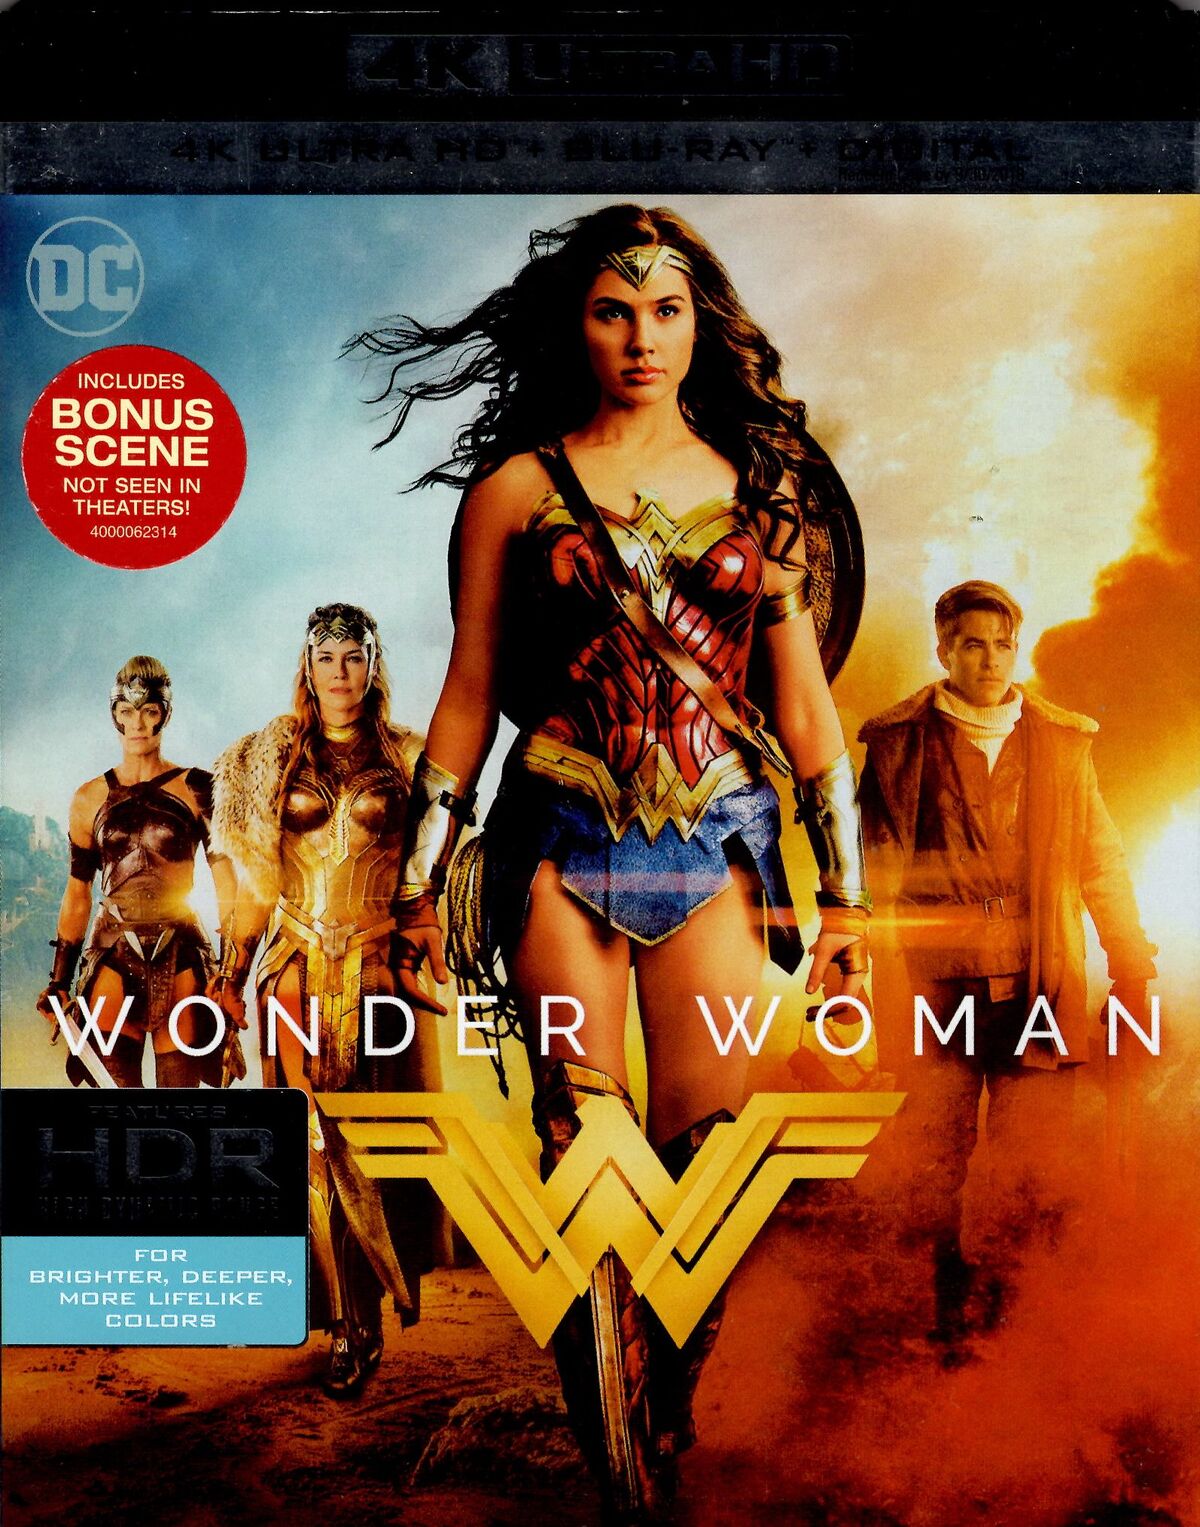 Wonder Woman (2017) - Poster 2 by CAMW1N